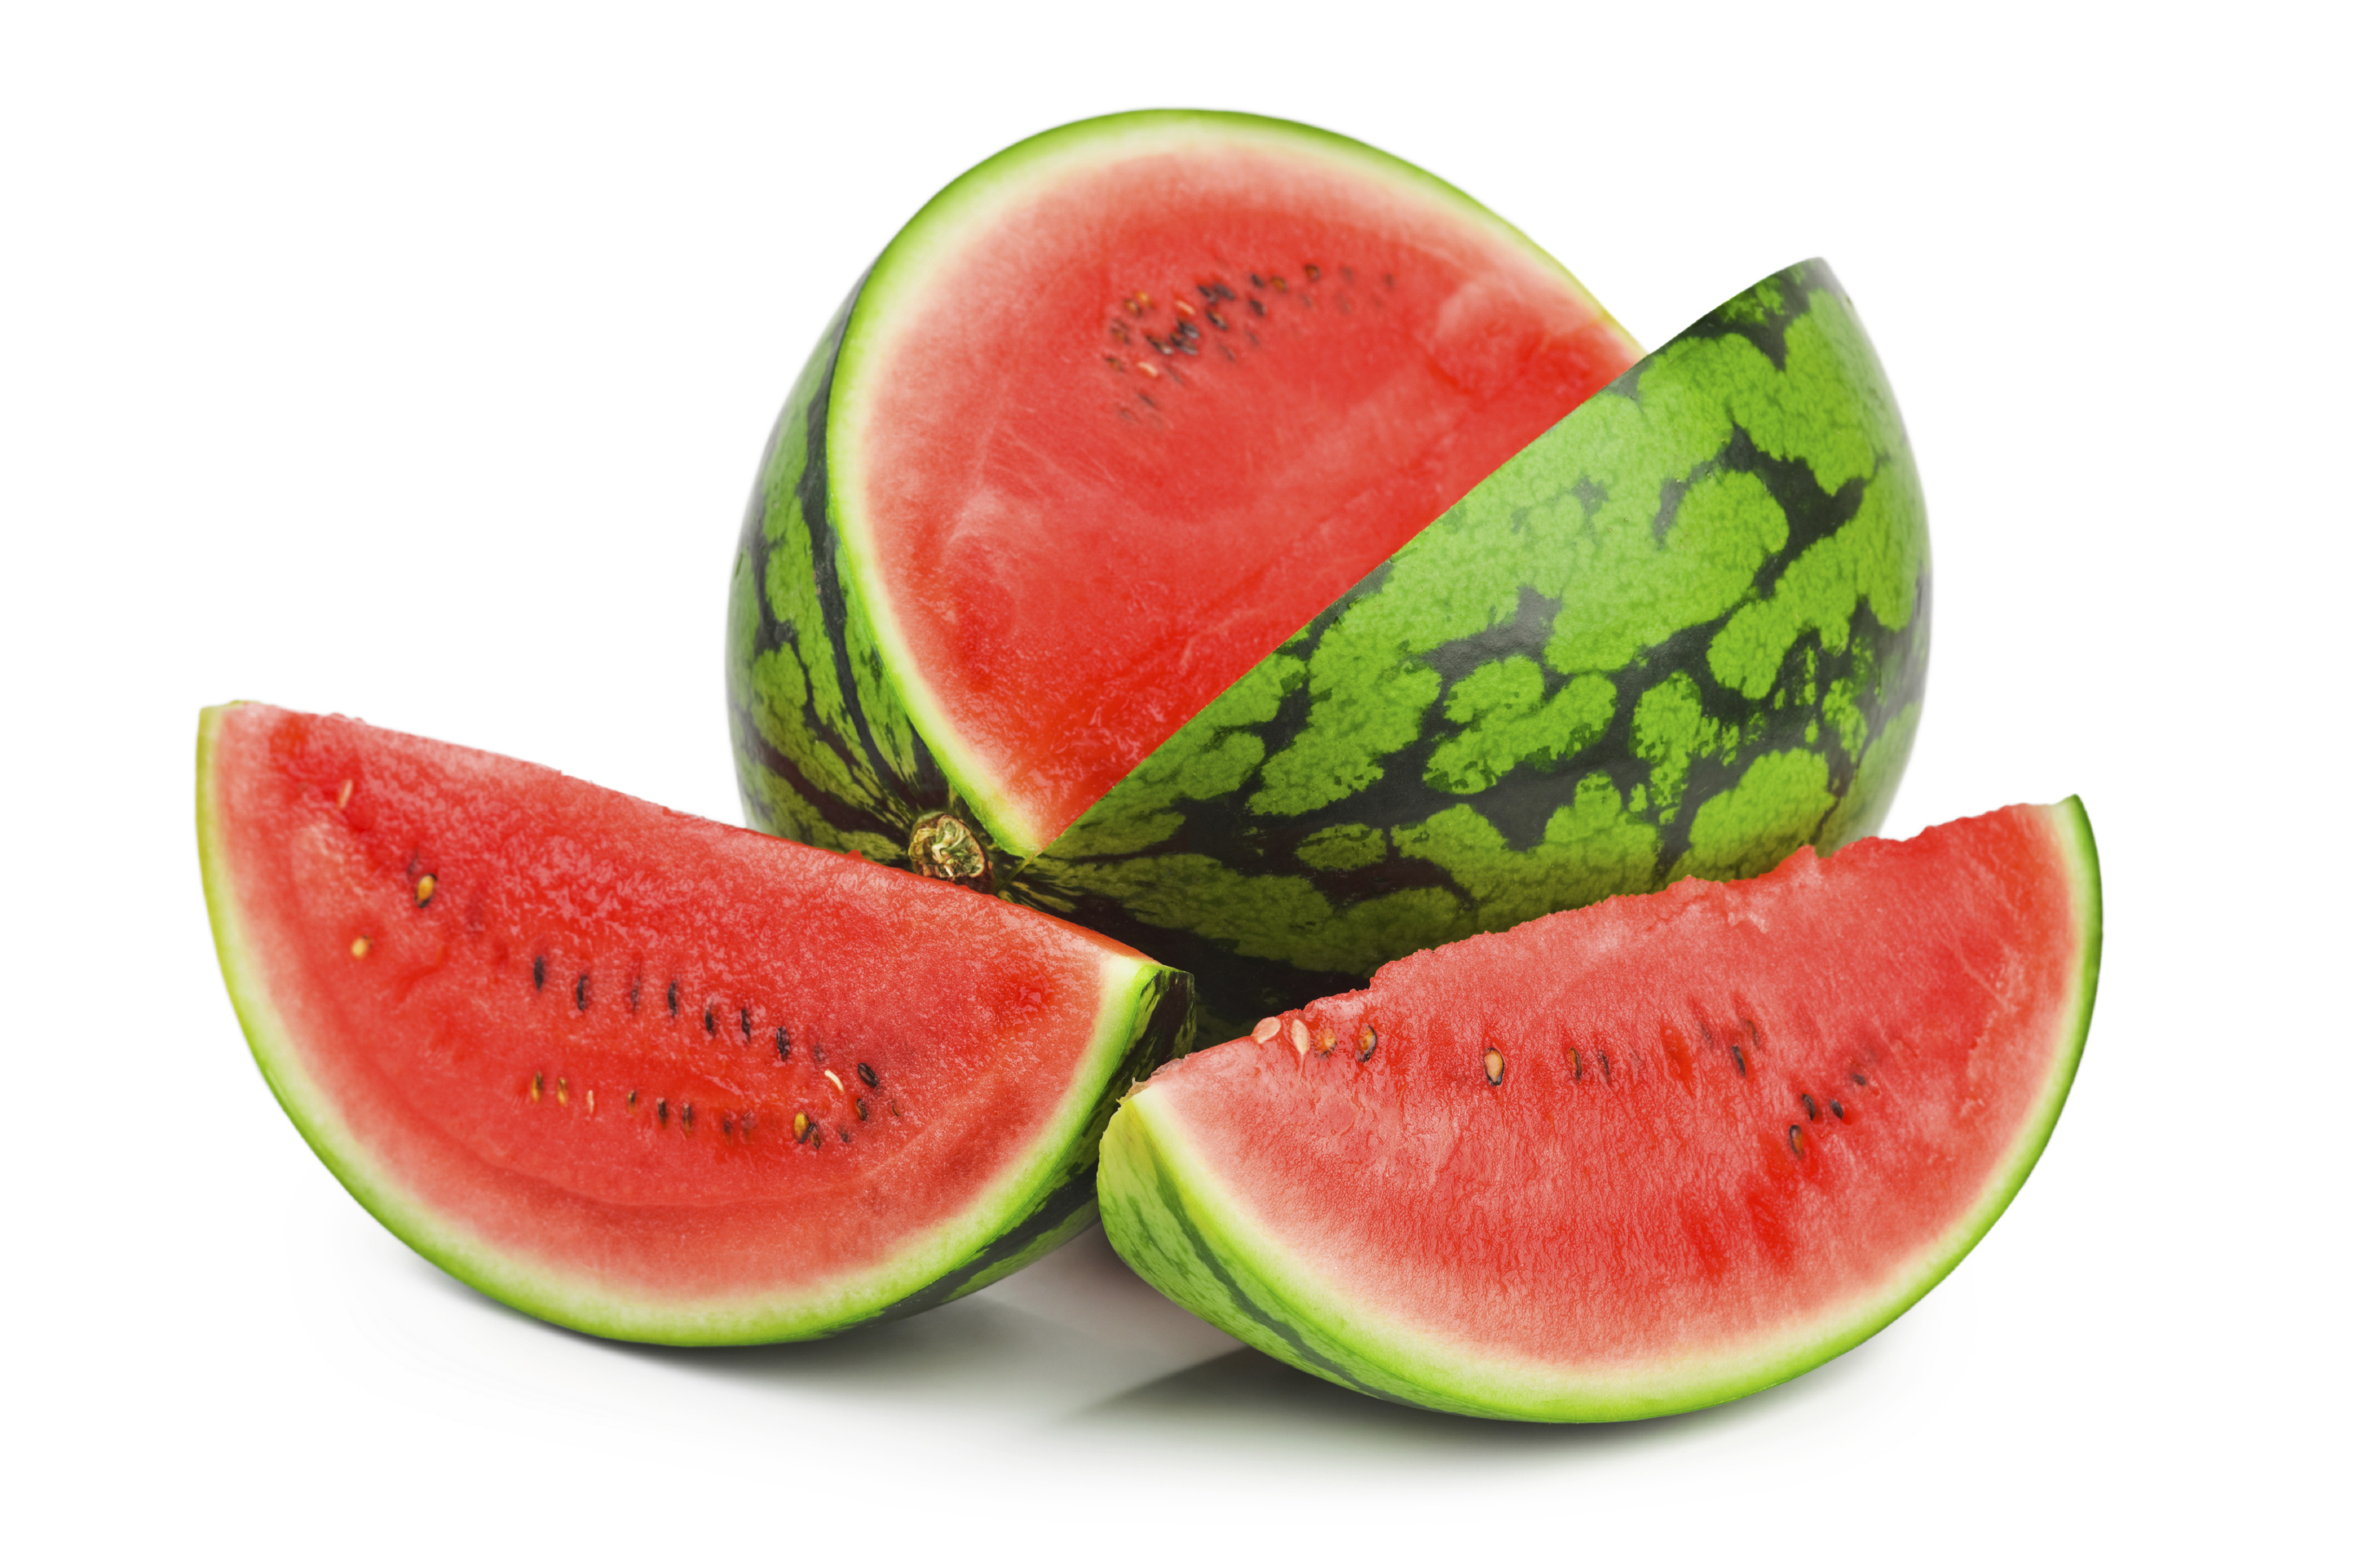 watermelon wallpaper hd,watermelon,melon,natural foods,fruit,food